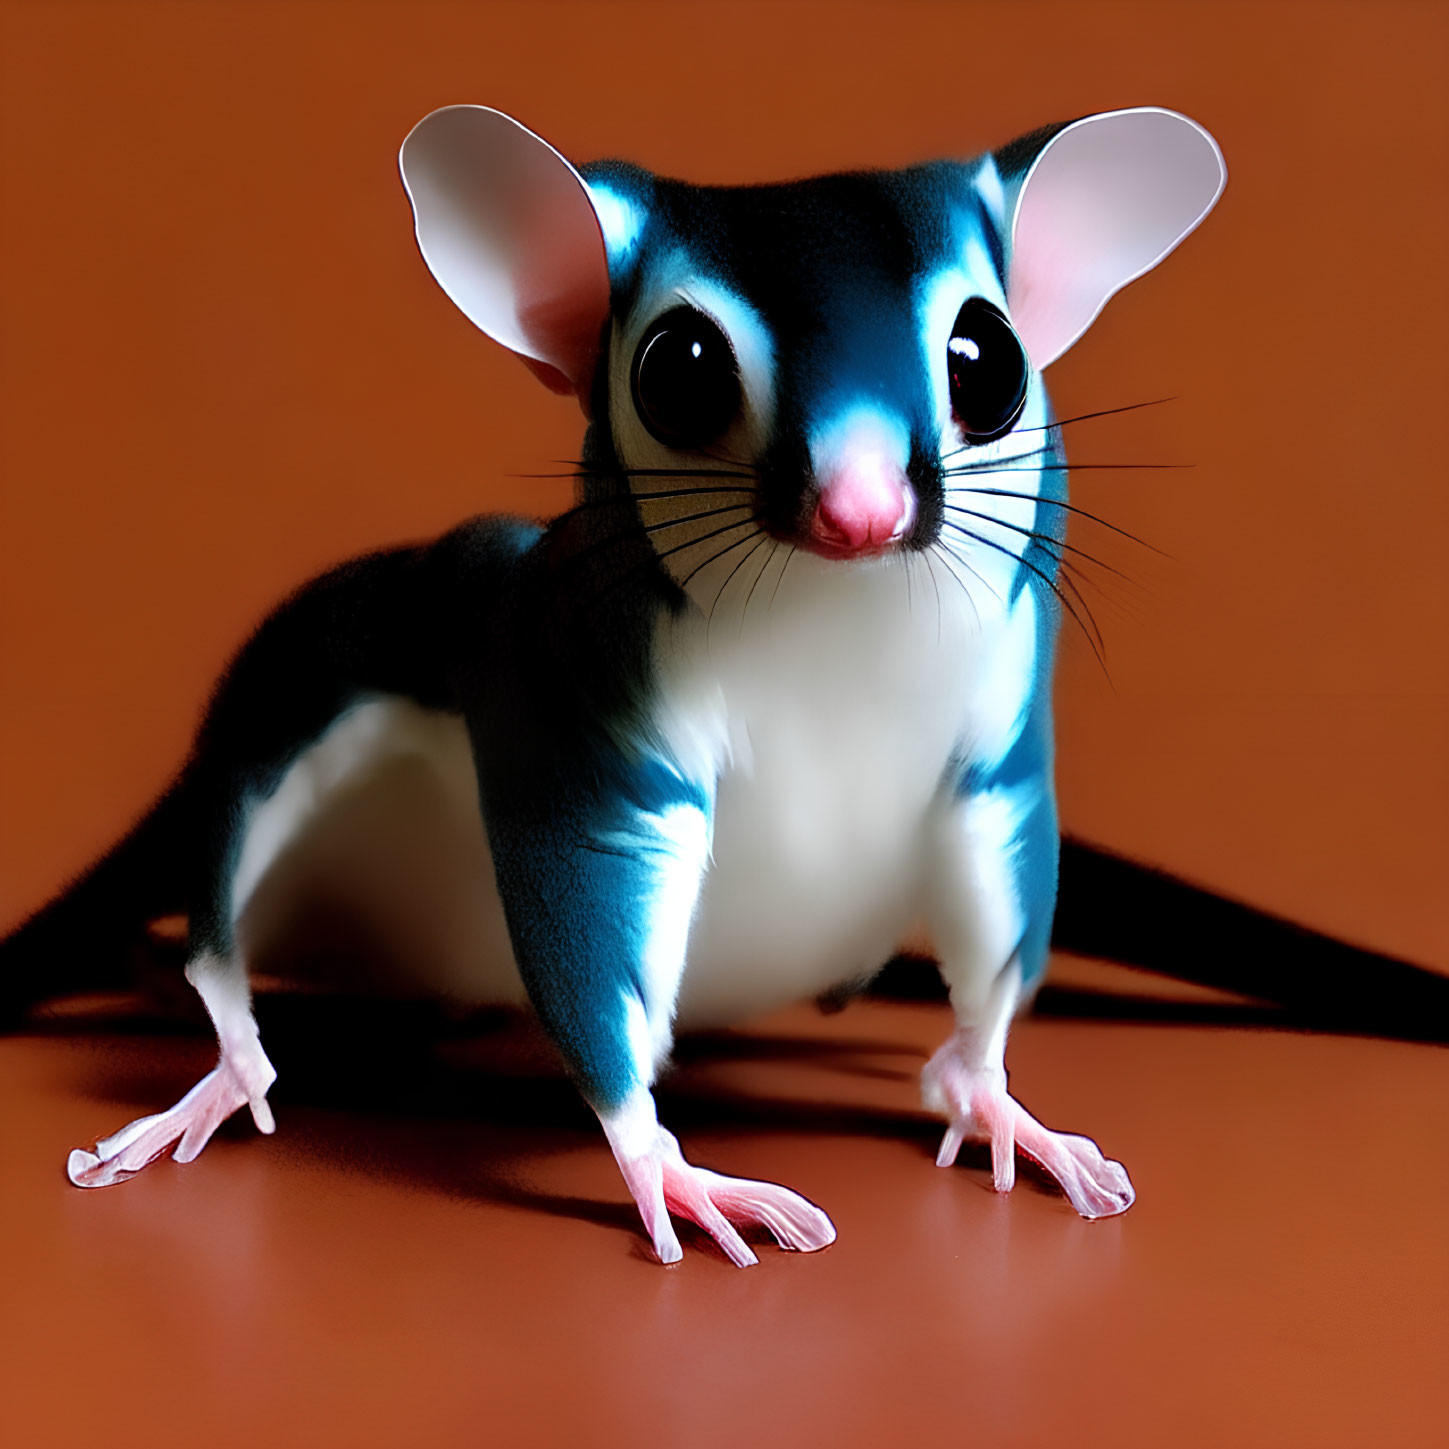 Digital blend of mouse and sugar glider with big eyes and blue fur on orange backdrop